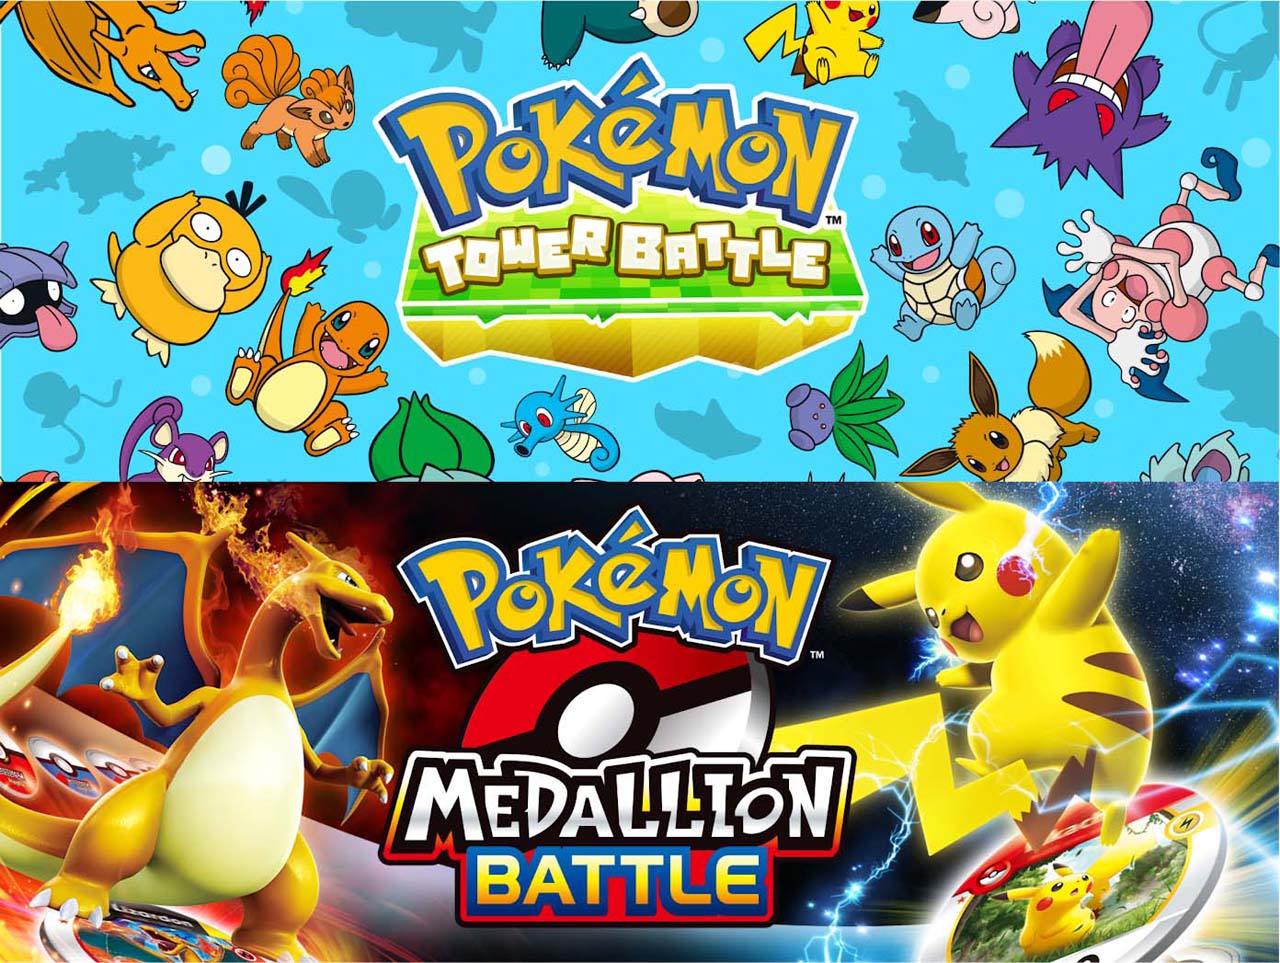 Ahora puedes jugar Pokémon Medallion Battle y Pokémon Tower Battle en Facebook